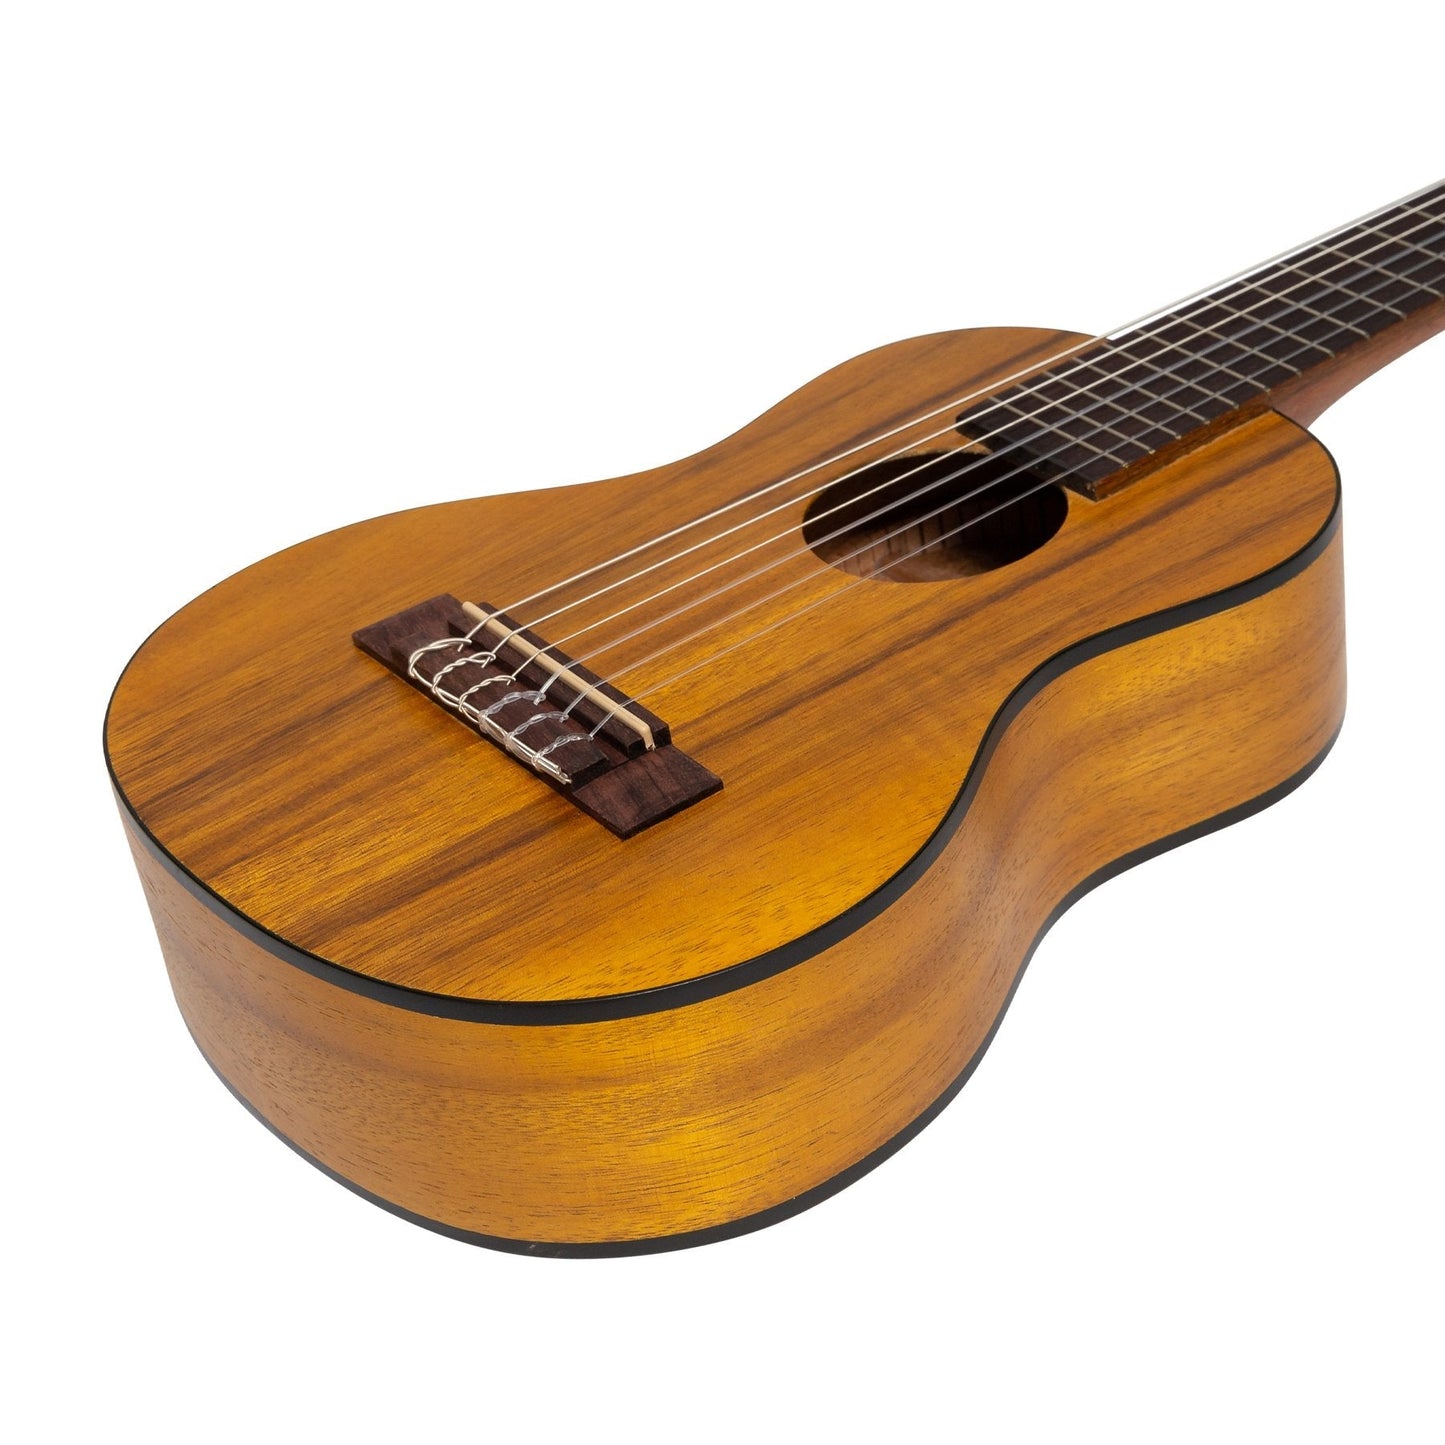 Mojo 'Guitarulele' 1/4 Size Classical Guitar (Koa)